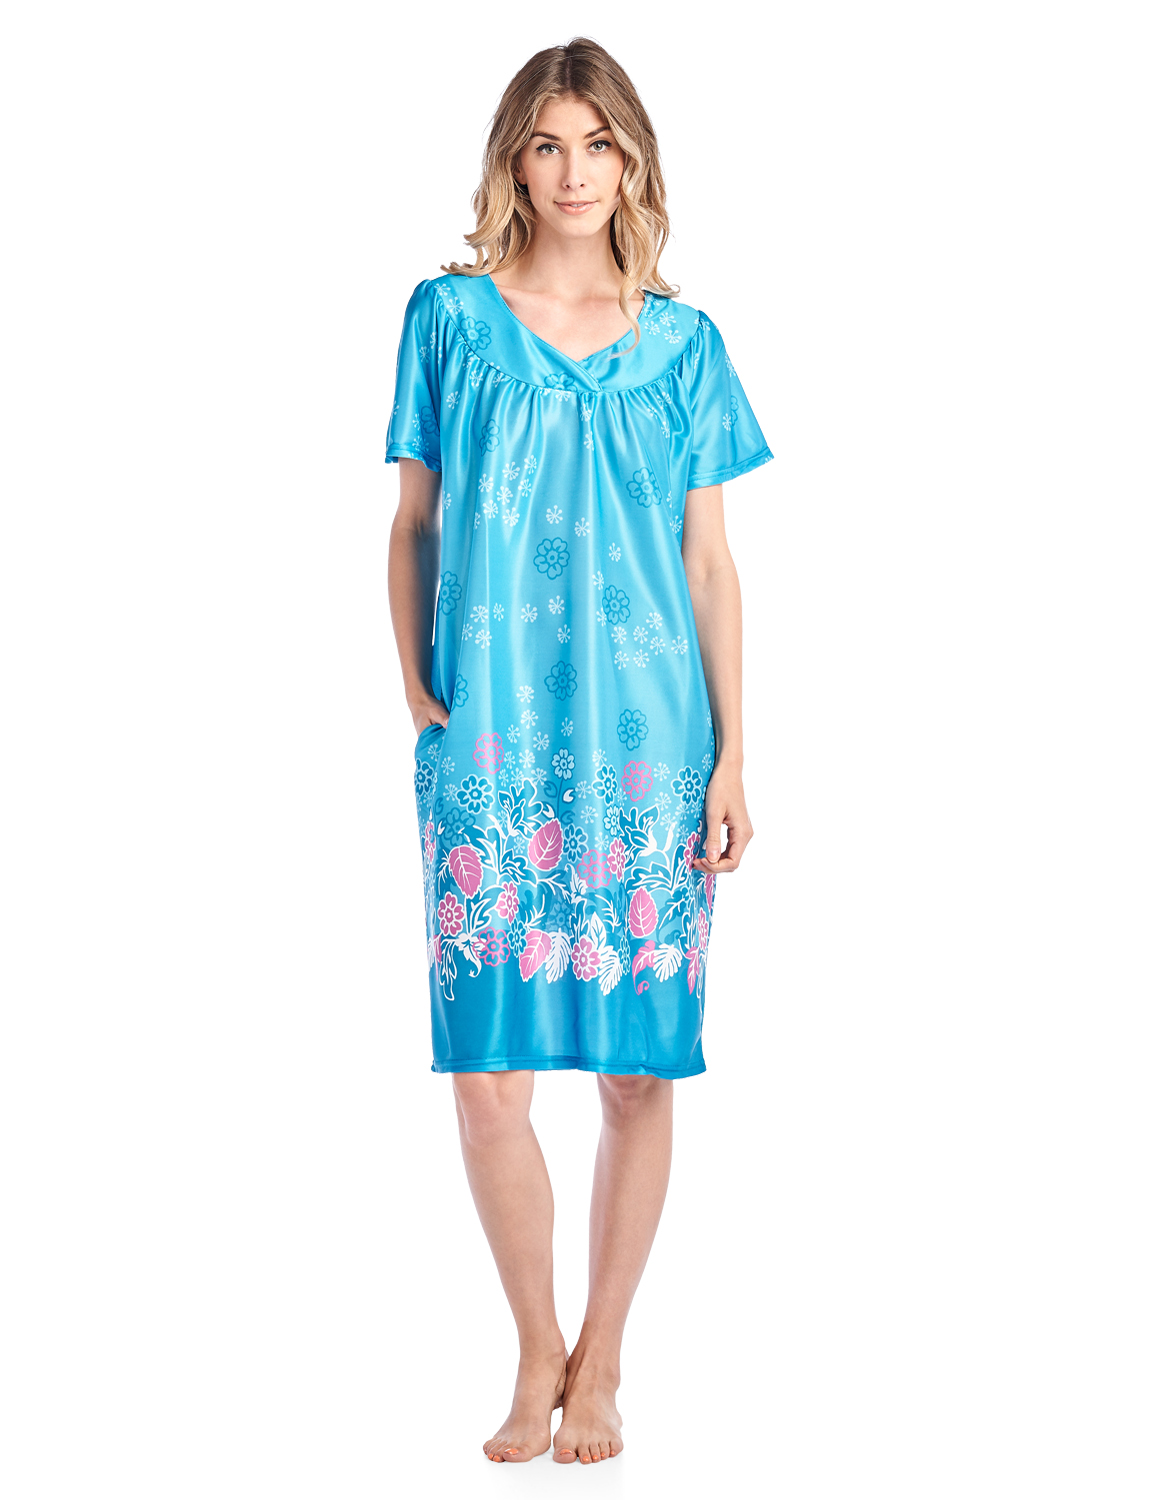 Casual Nights Women's Short Sleeve Muumuu Lounger Dress - image 5 of 5